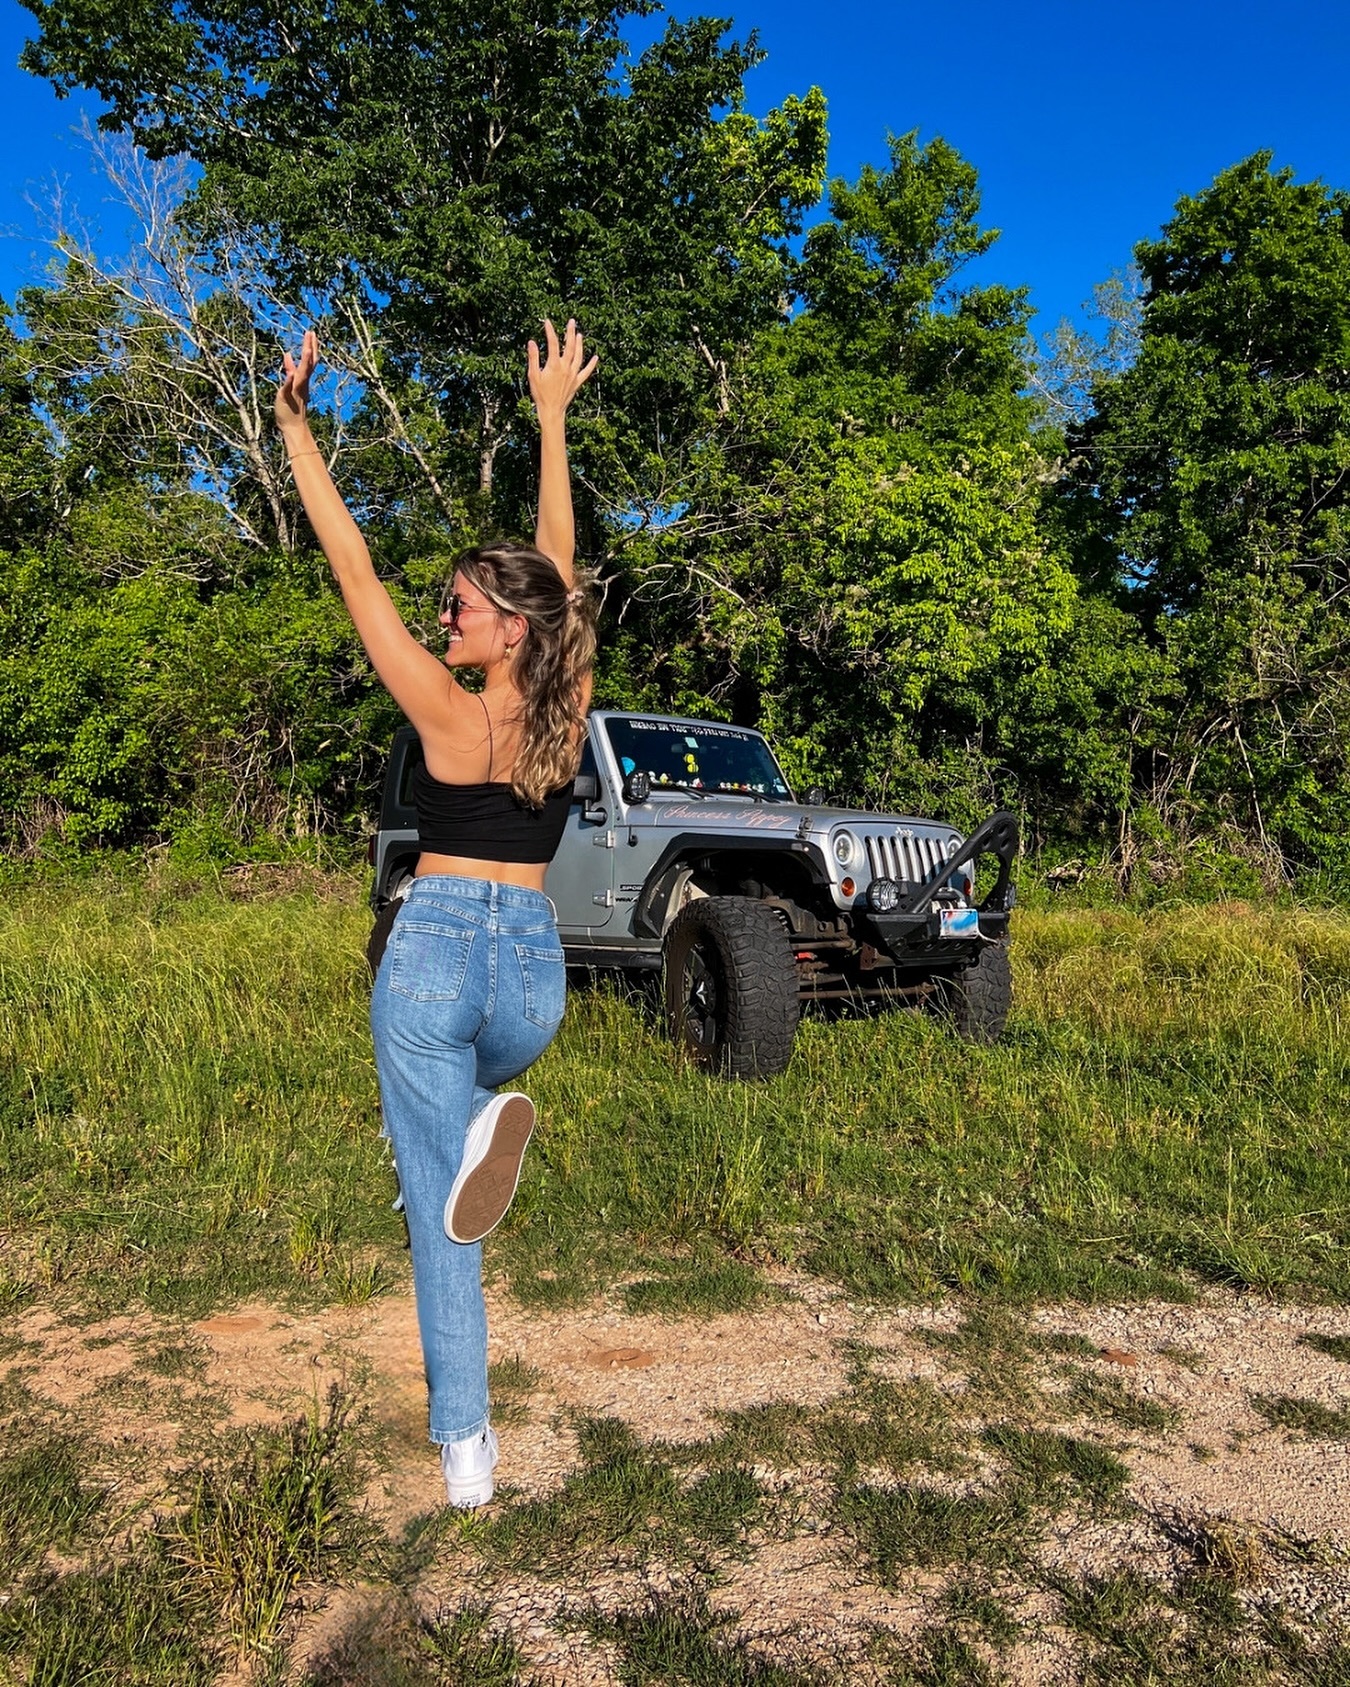 Just a sunny girlie ☀️

#Jeepgirl #jeeplife #jeepjk #wrangler #jeepwrangler #mallcrawler #jeepgirlsdoitbetter #adventure #houstonjeeps #jeepgirlslikeitdirty #2doorjeep #jeepbabe #jeep #jeepgirlgang #jeepgirlsrock